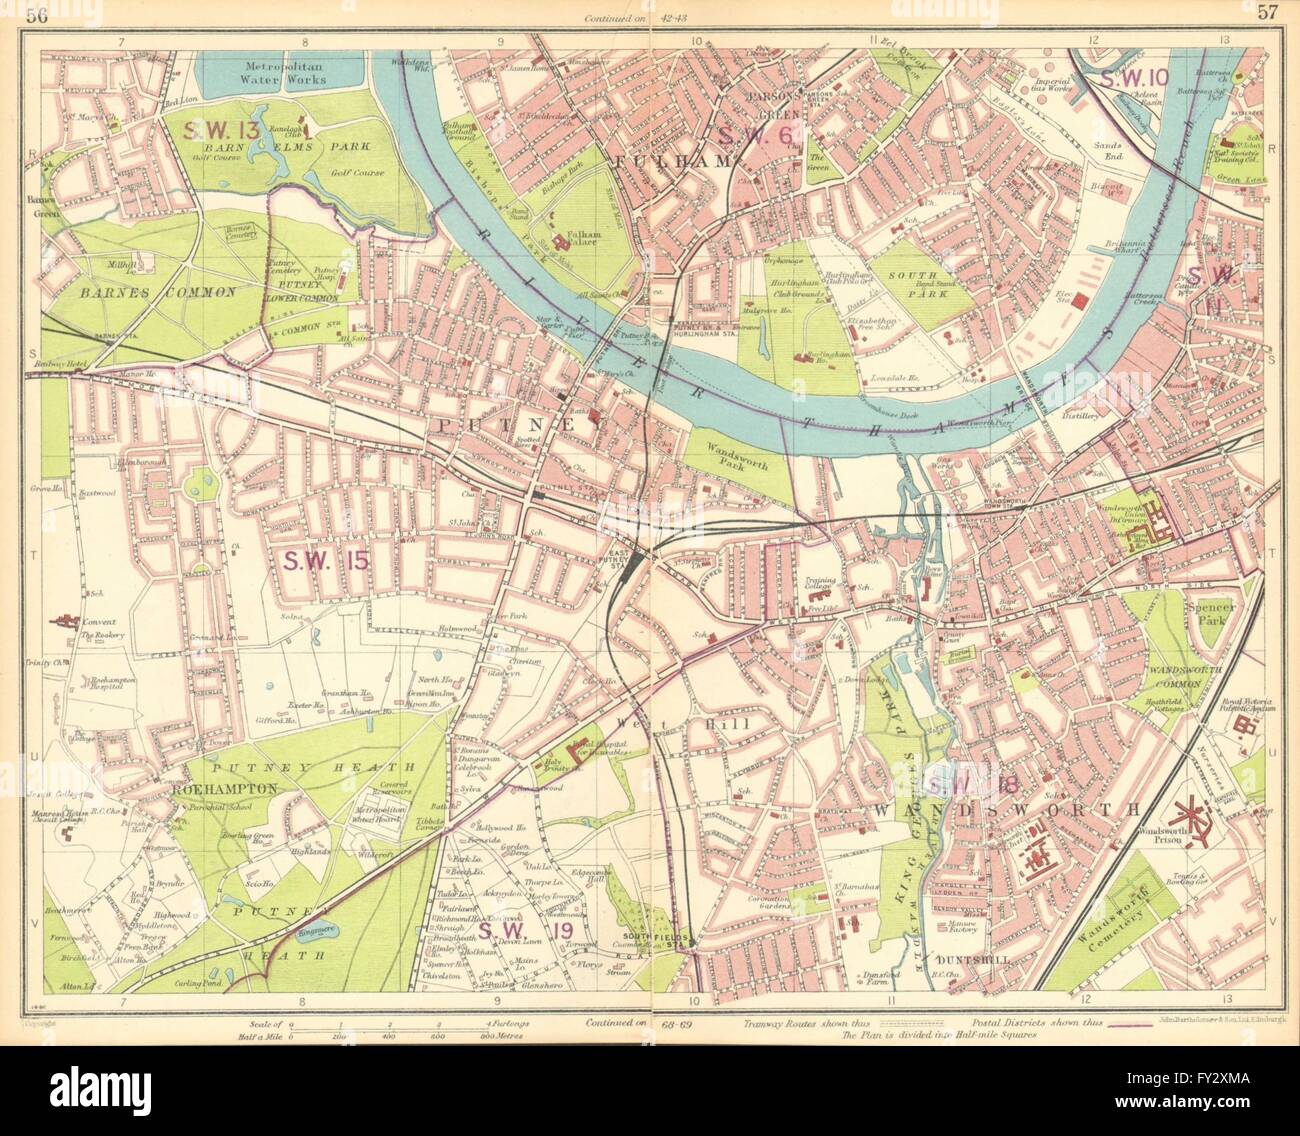 LONDON SW: Putney Wandsworth Fulham Barnes Parson's Green Roehampton, 1930 map Stock Photo